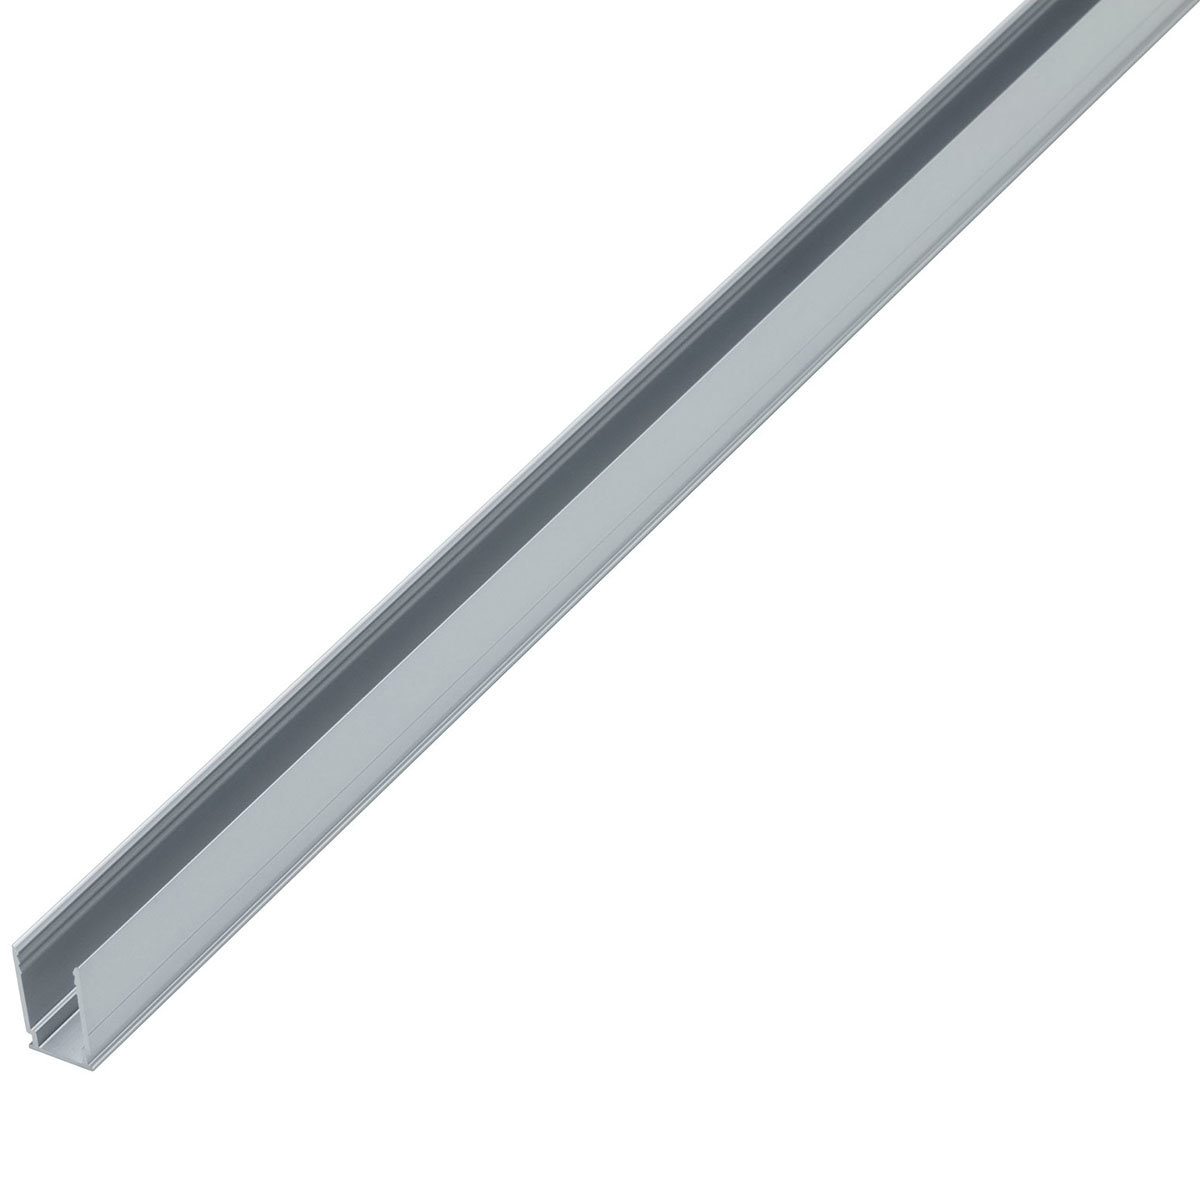 LED Strip Aluminiumprofil Plug & Shine flexible Neon
| #3